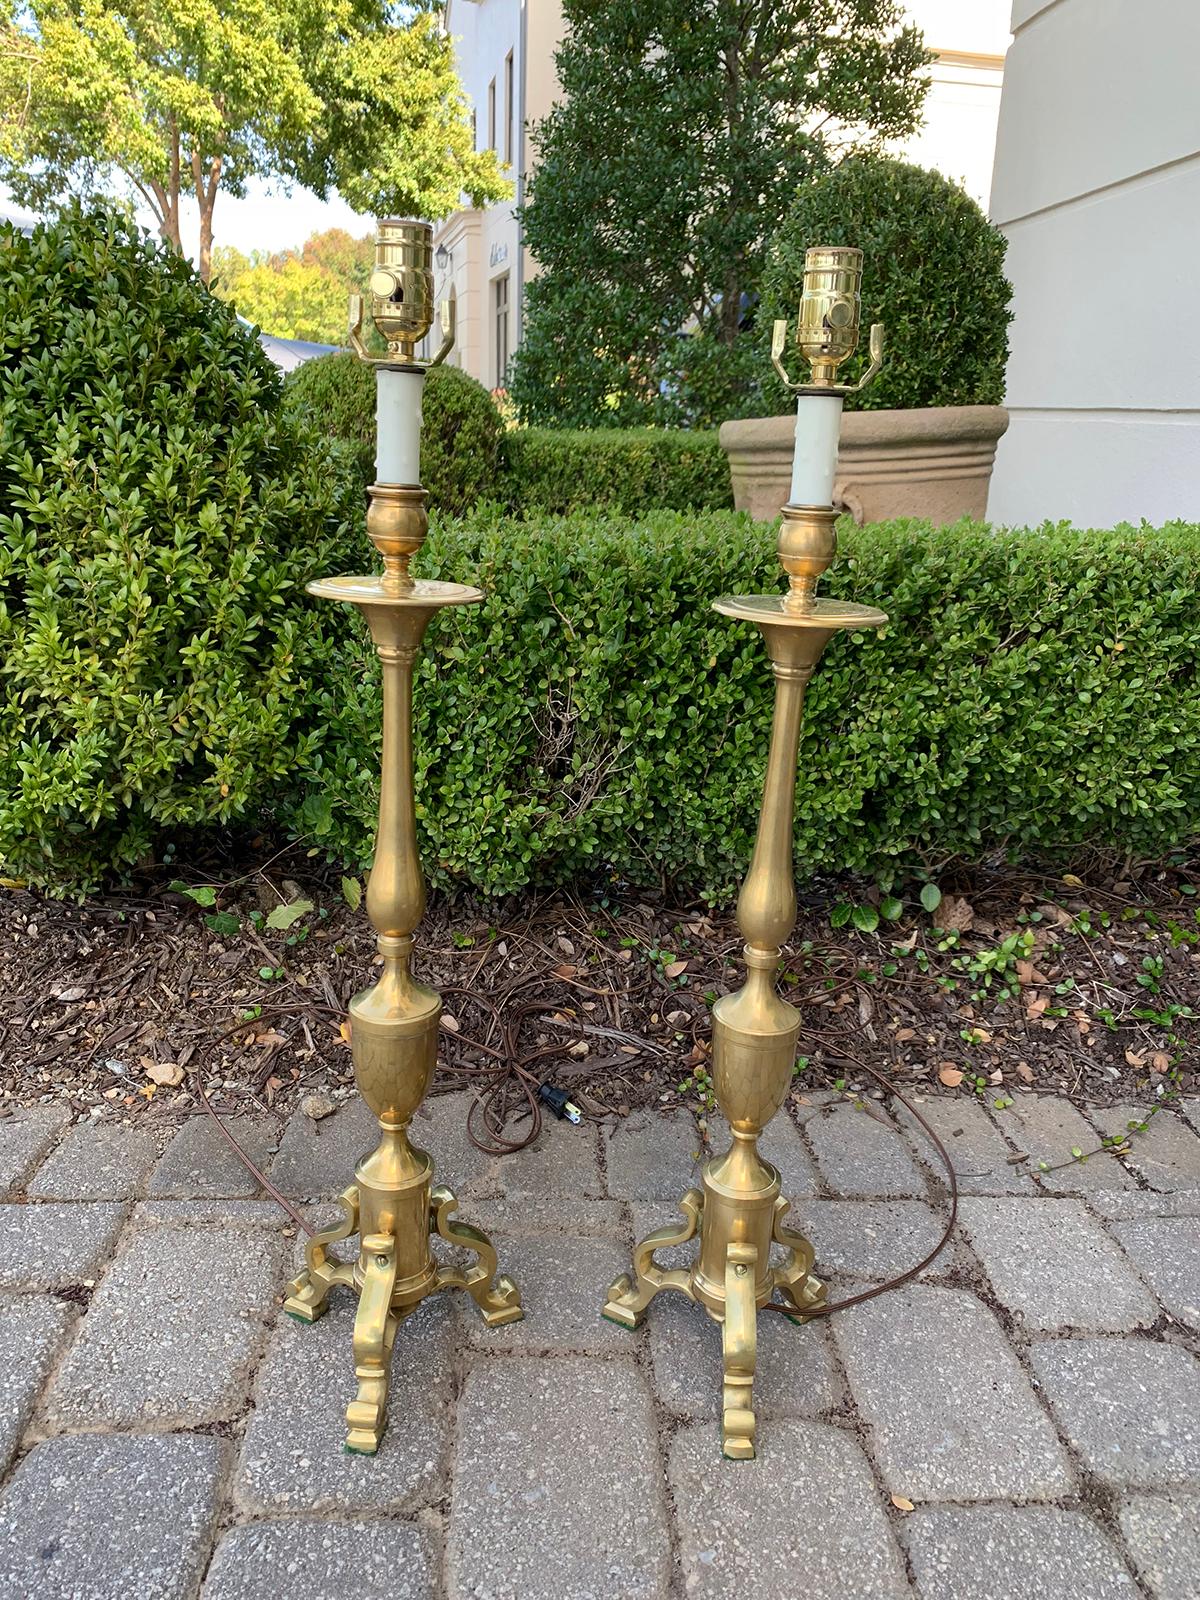 Pair of circa 1970s Chapman brass candlesticks as lamps.
Brand new wiring.